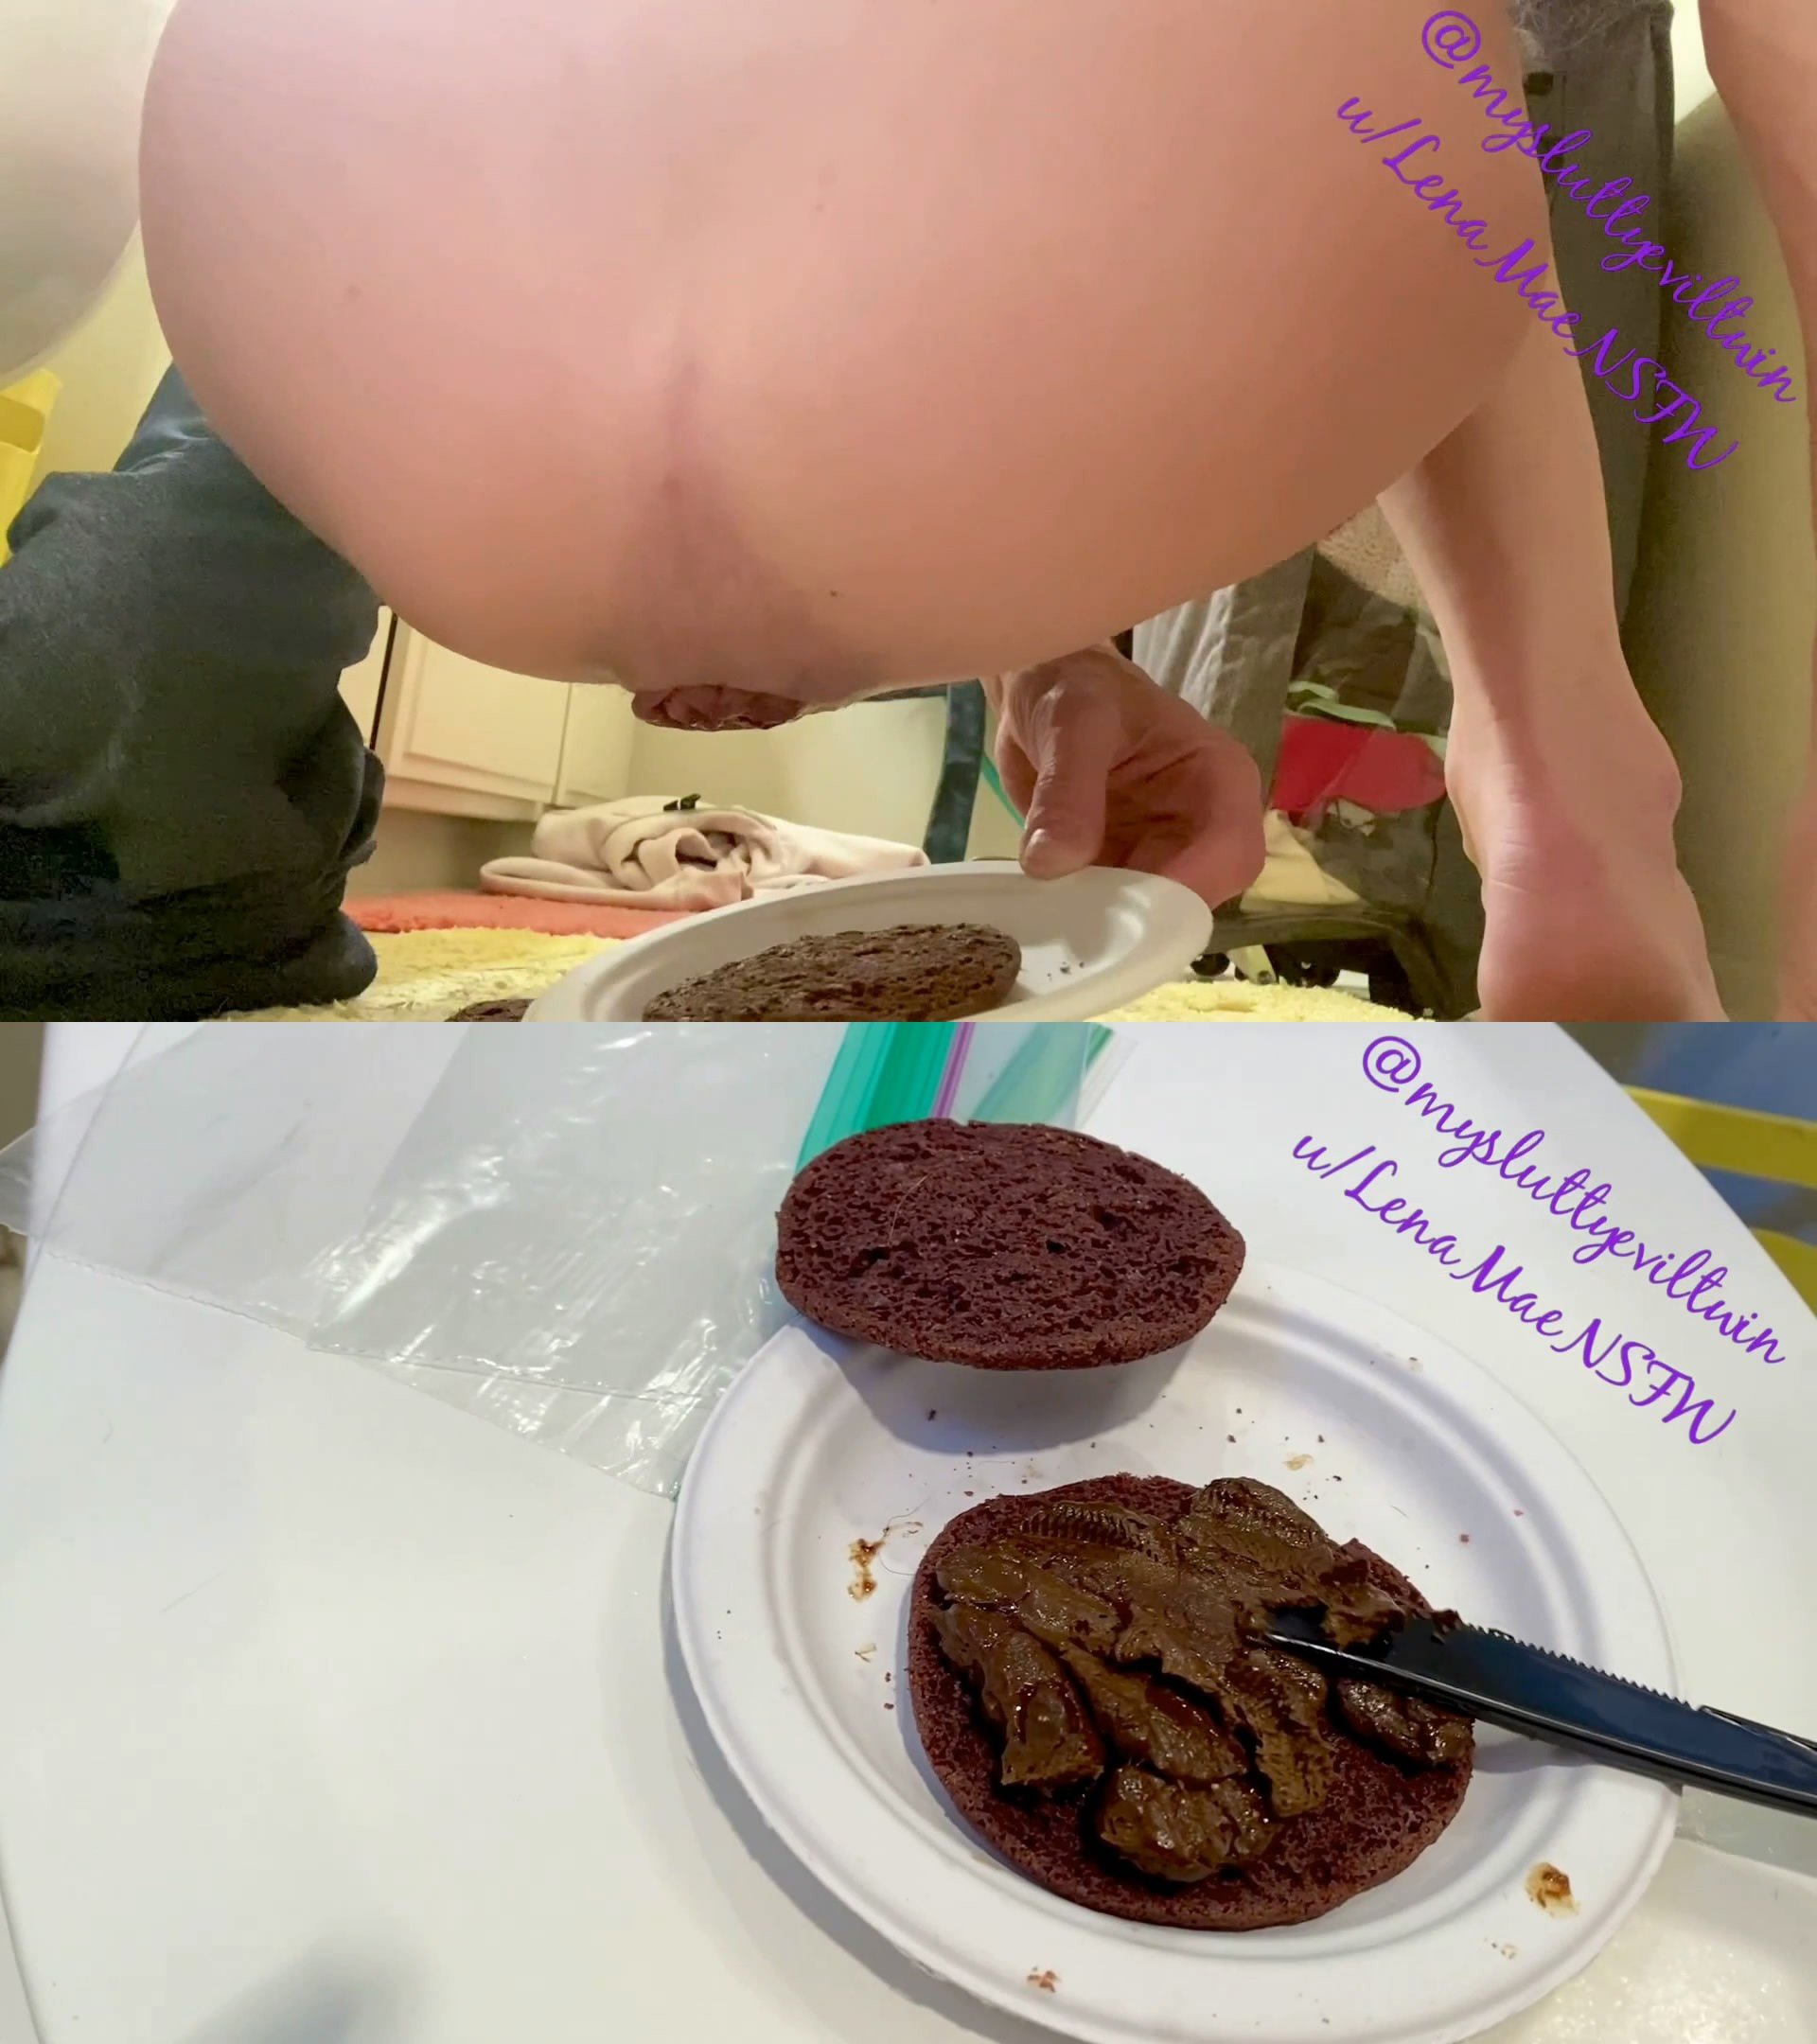 Making Chocolate Frosting(Long) – LOTs of Straining/Prolapsing! starring in video LenaMaek | April 27, 2022 ($16.99 ScatShop)